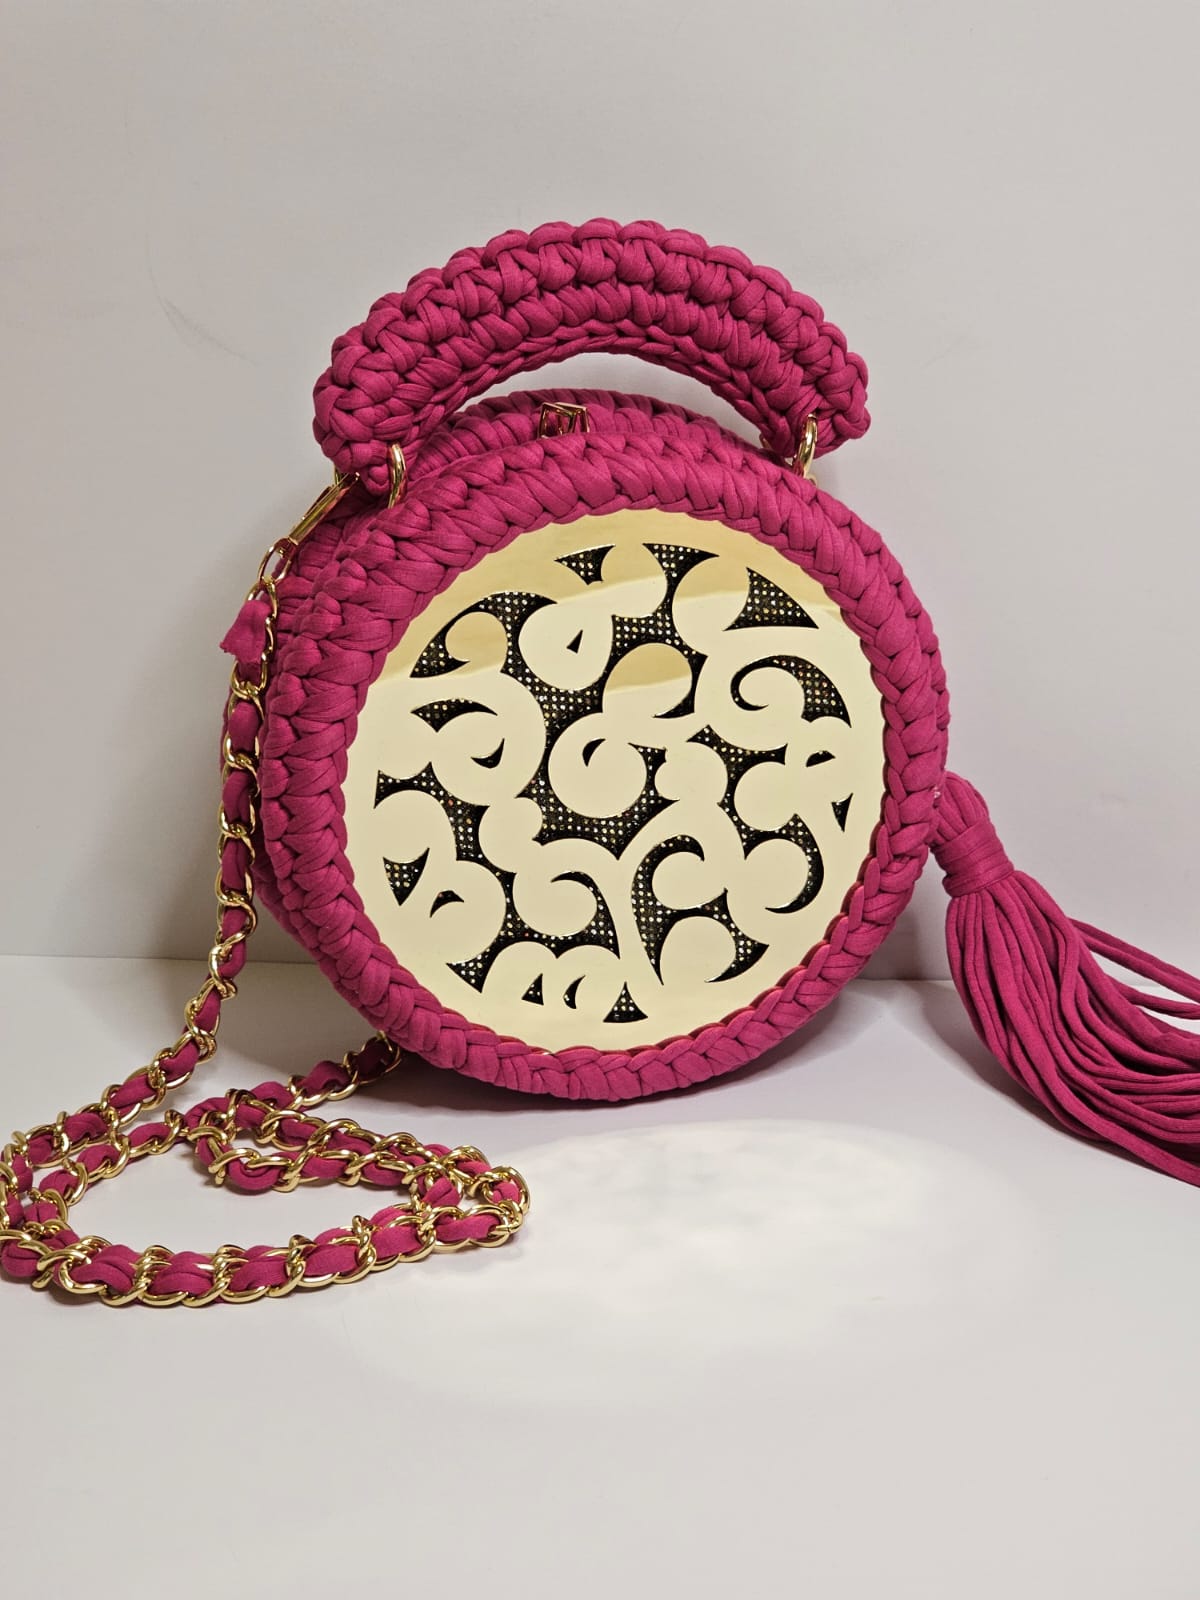 Ladies handbag - Crochet round style